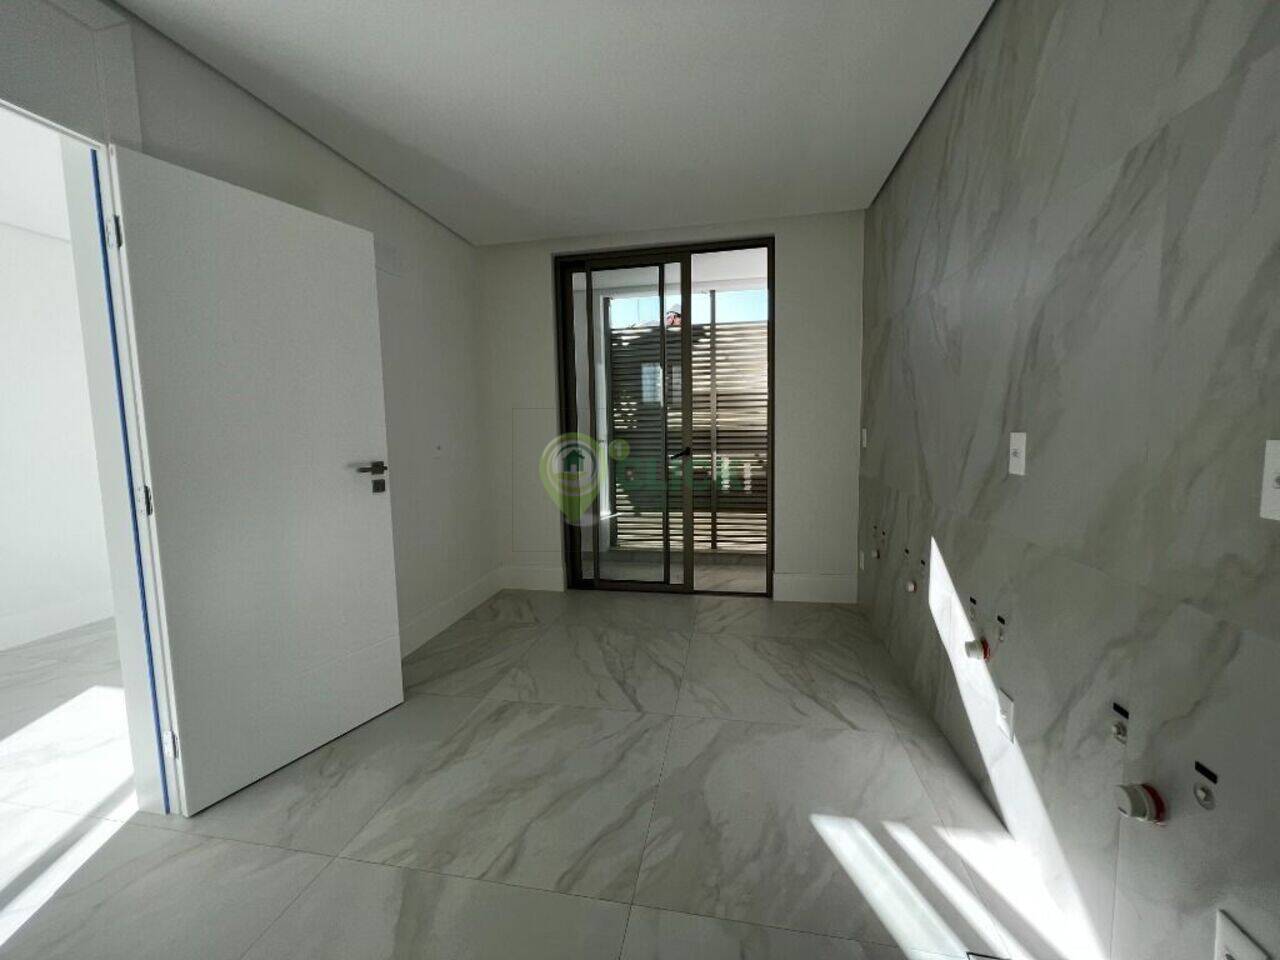 Apartamento Anita Garibaldi, Joinville - SC